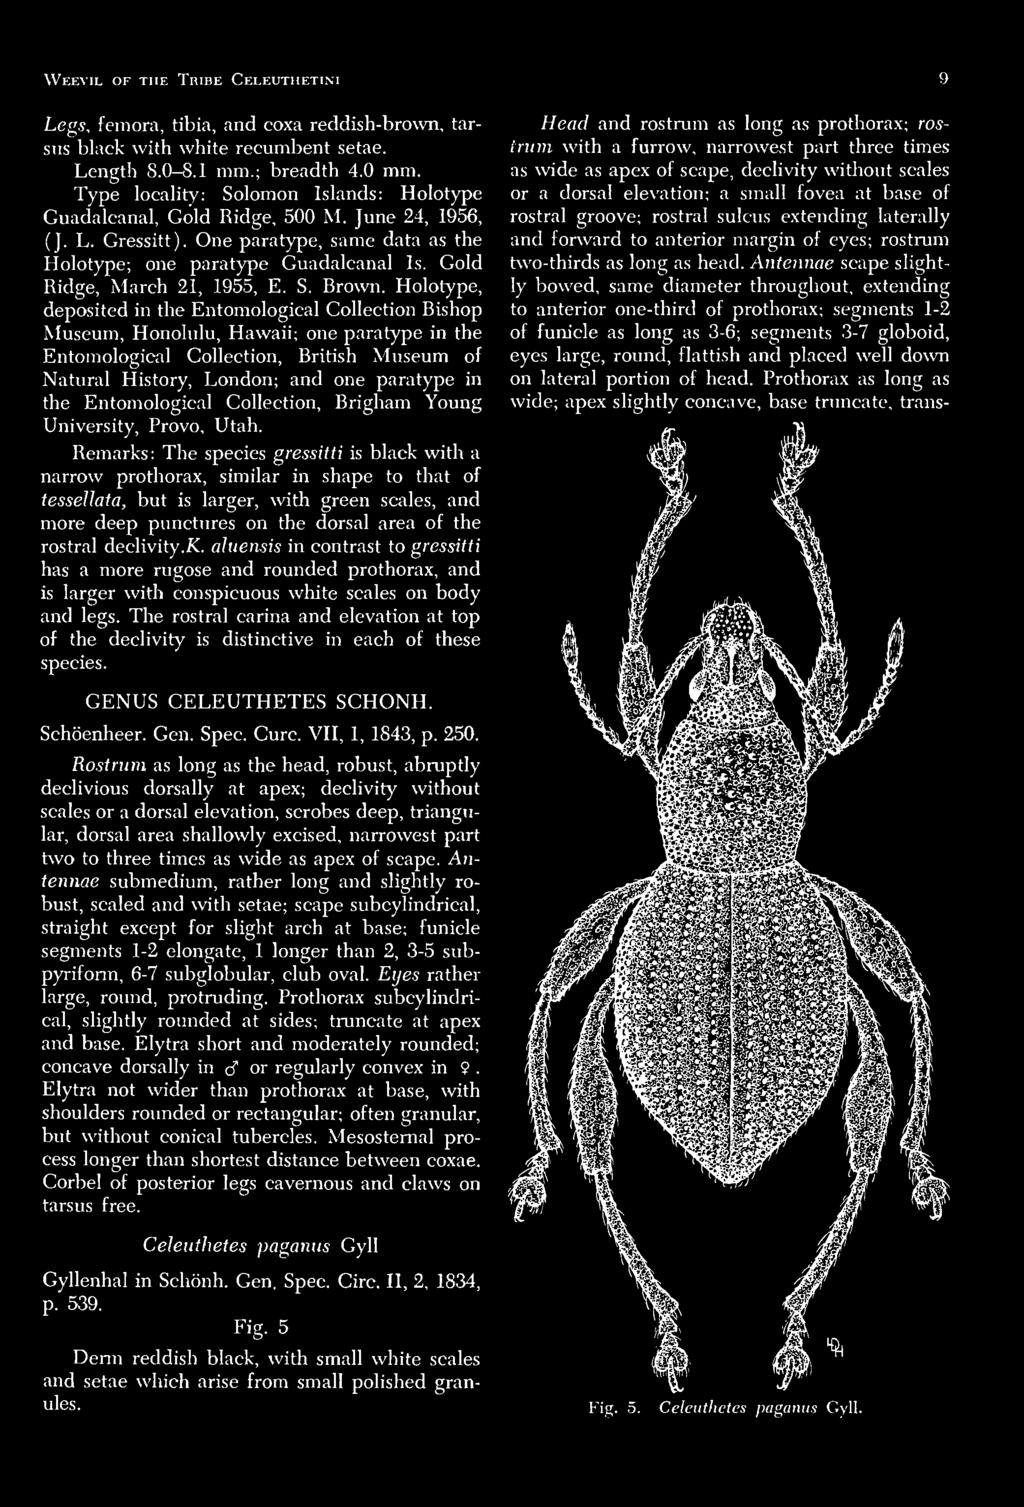 Entomological Collection, Brigham Young University, Provo, Utah.